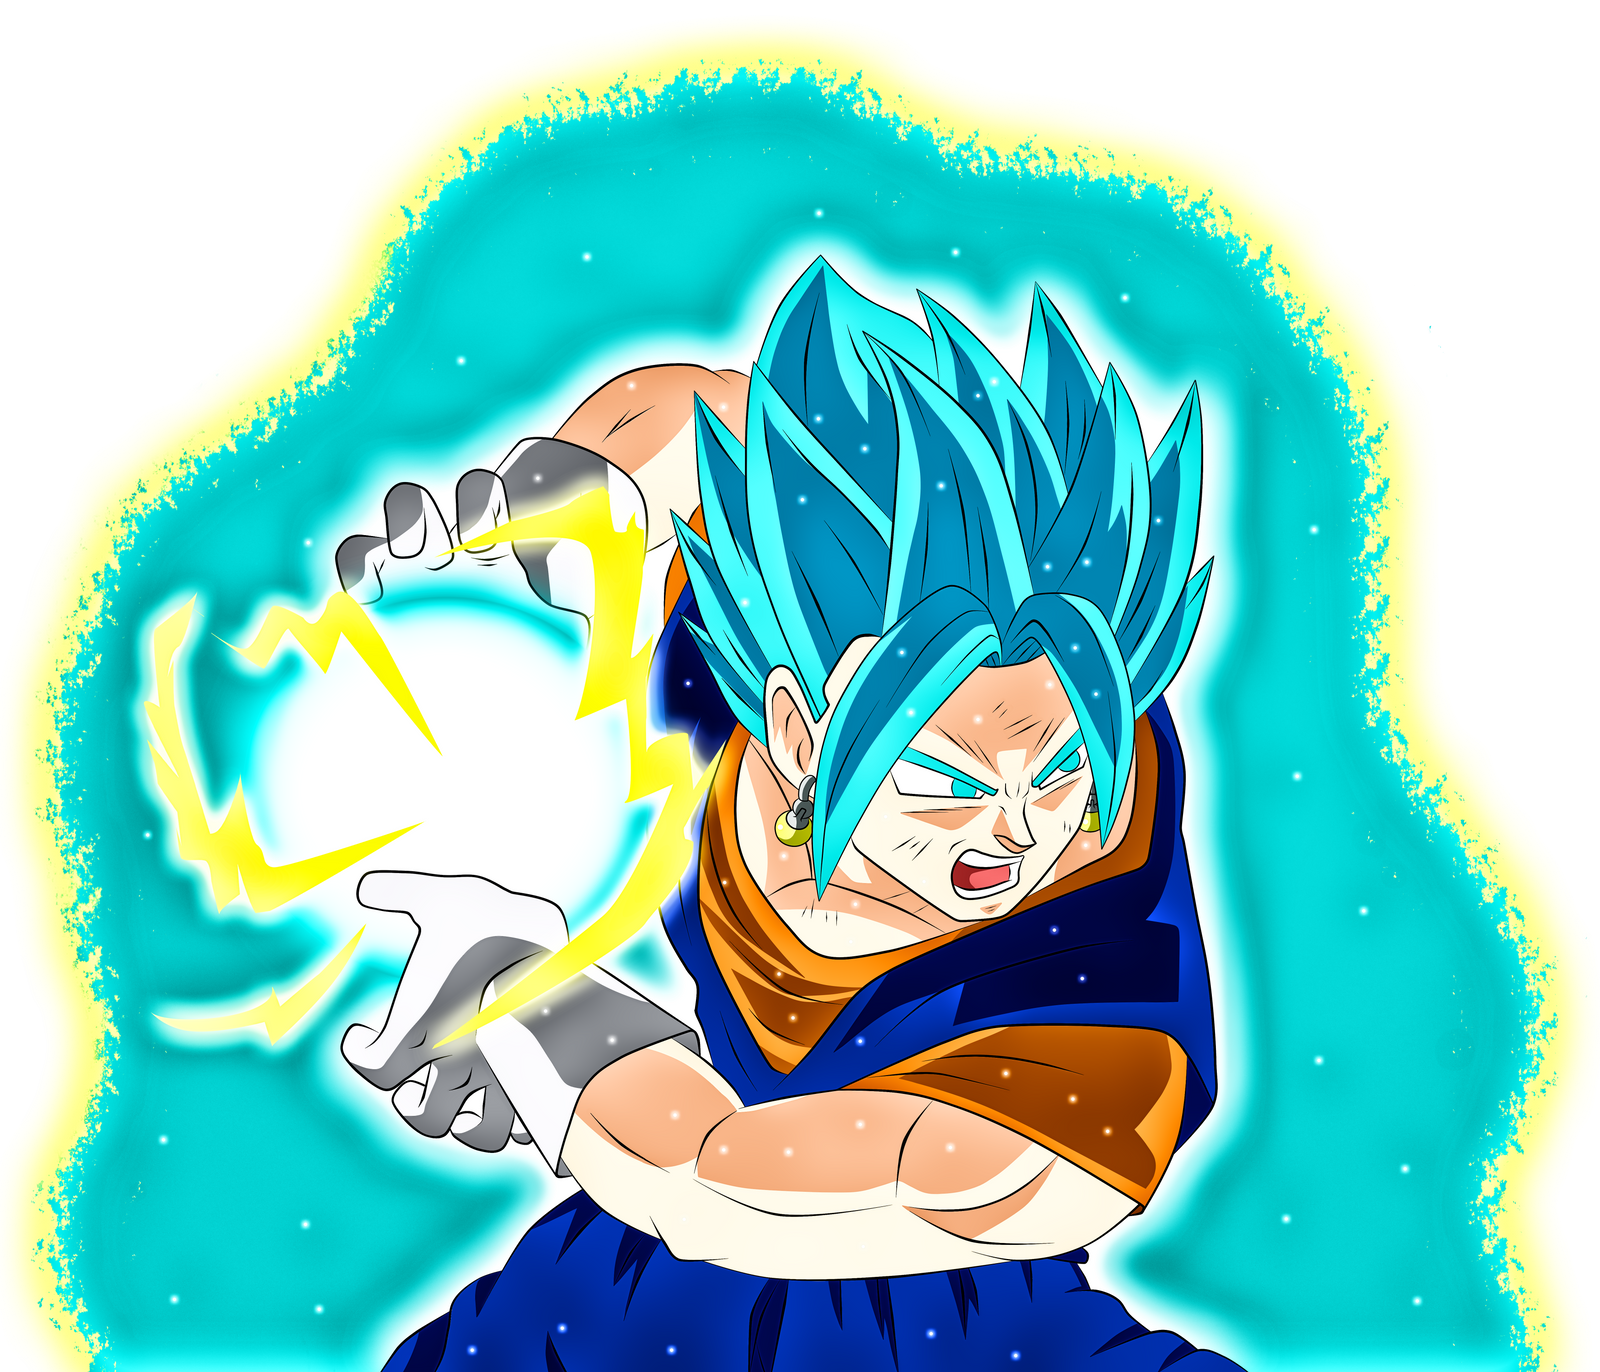 Goku en kamehameha y Vegeta en Final Flash by Alfa-Art on DeviantArt